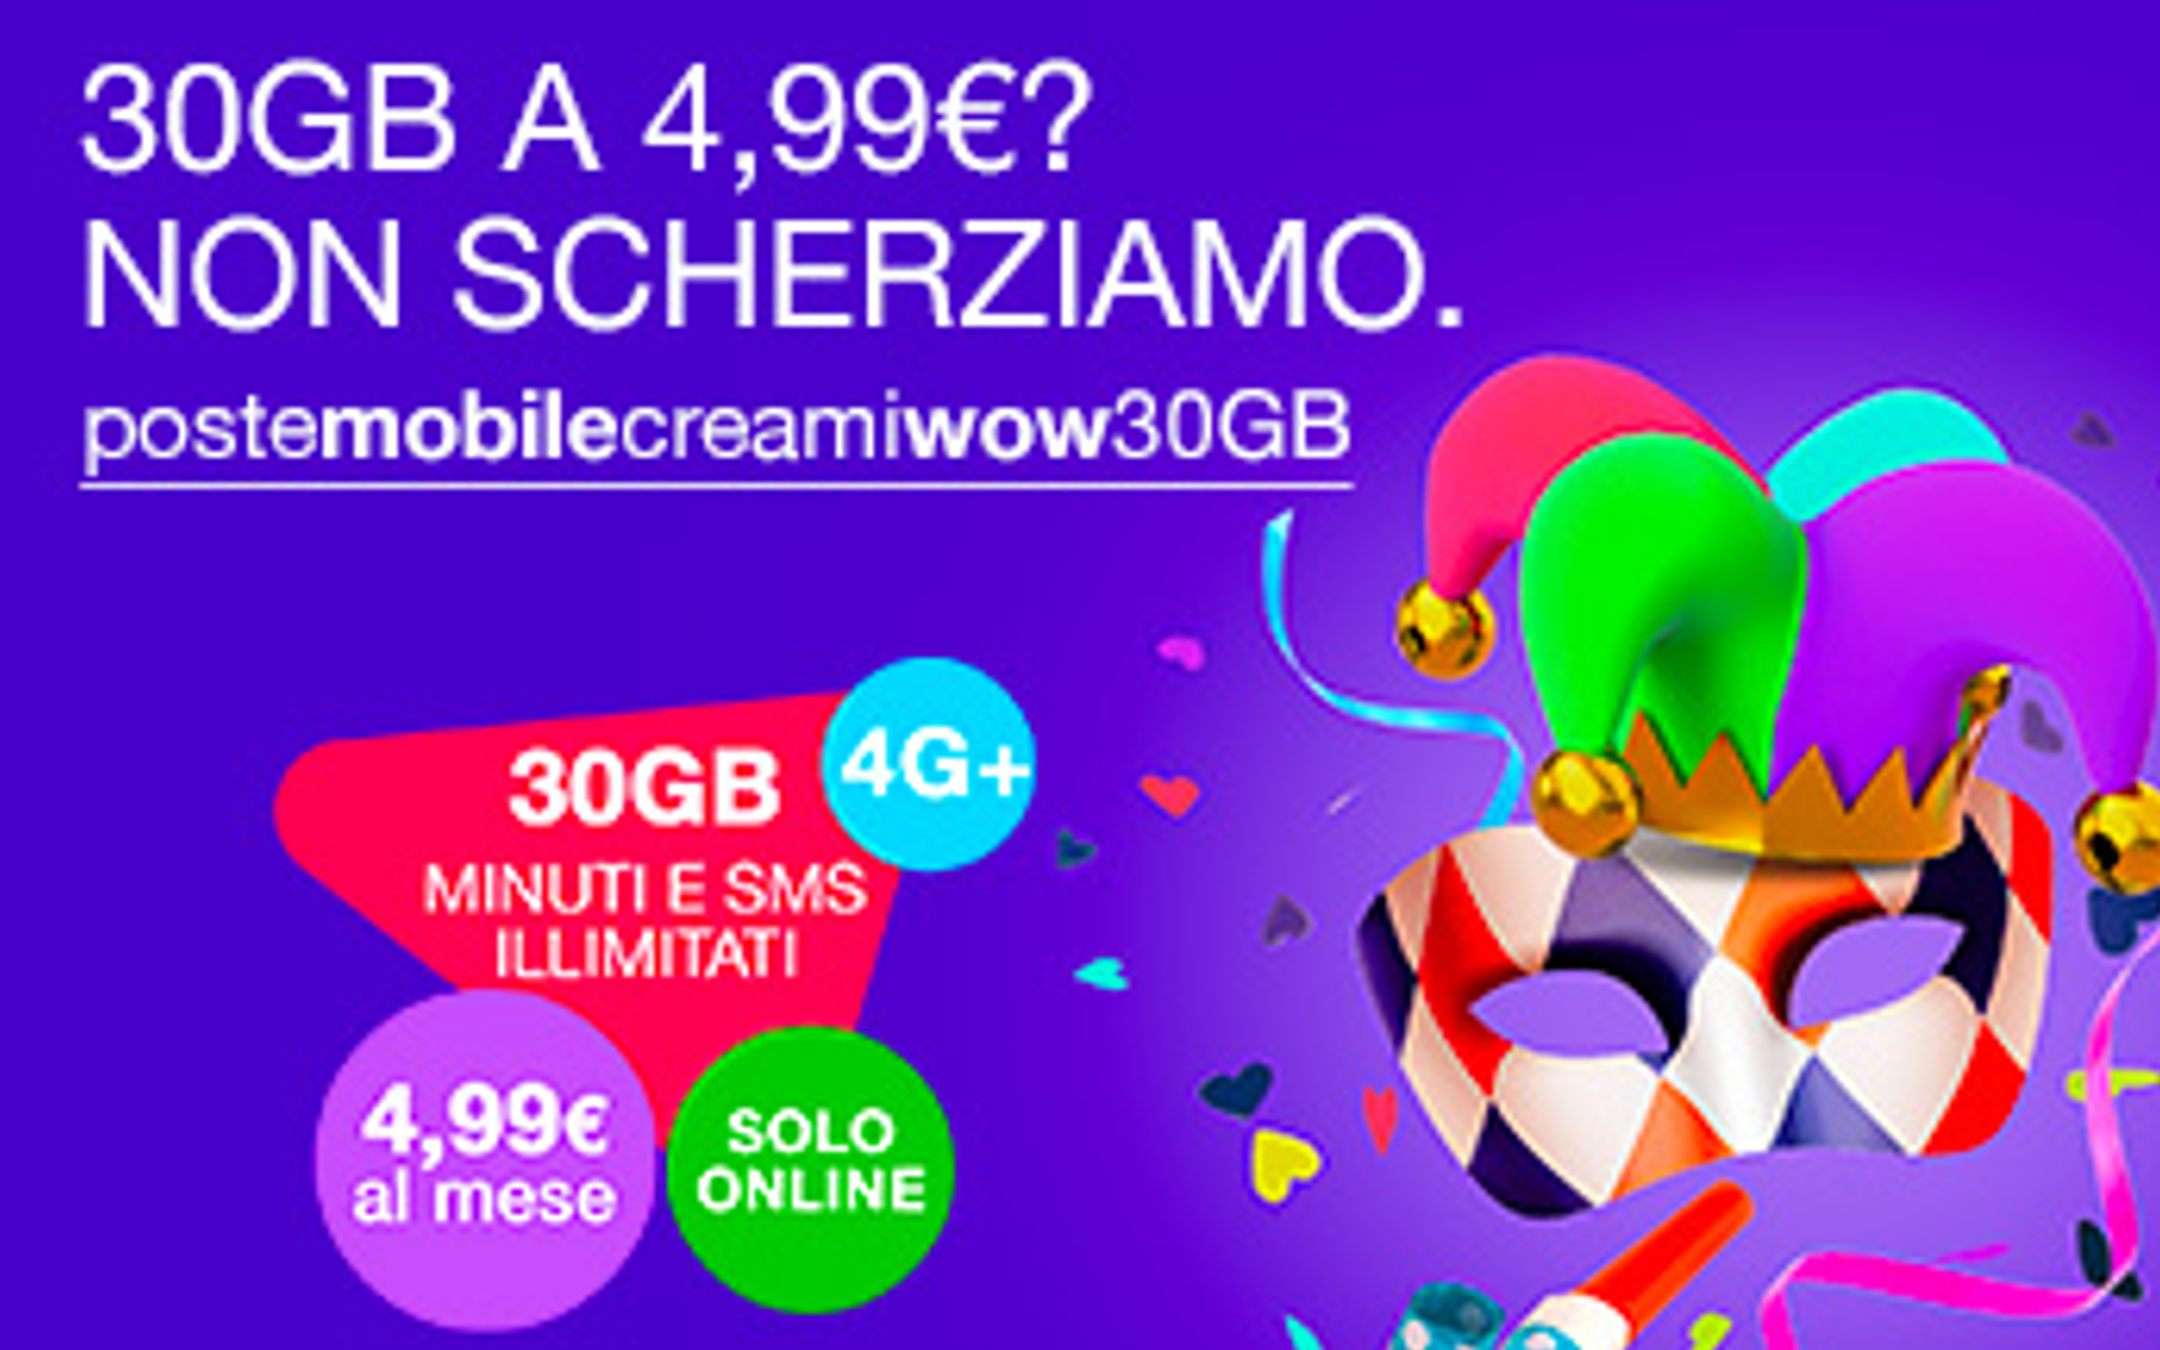 PosteMobile Creami WOW 30GB: ancora a 4,99€